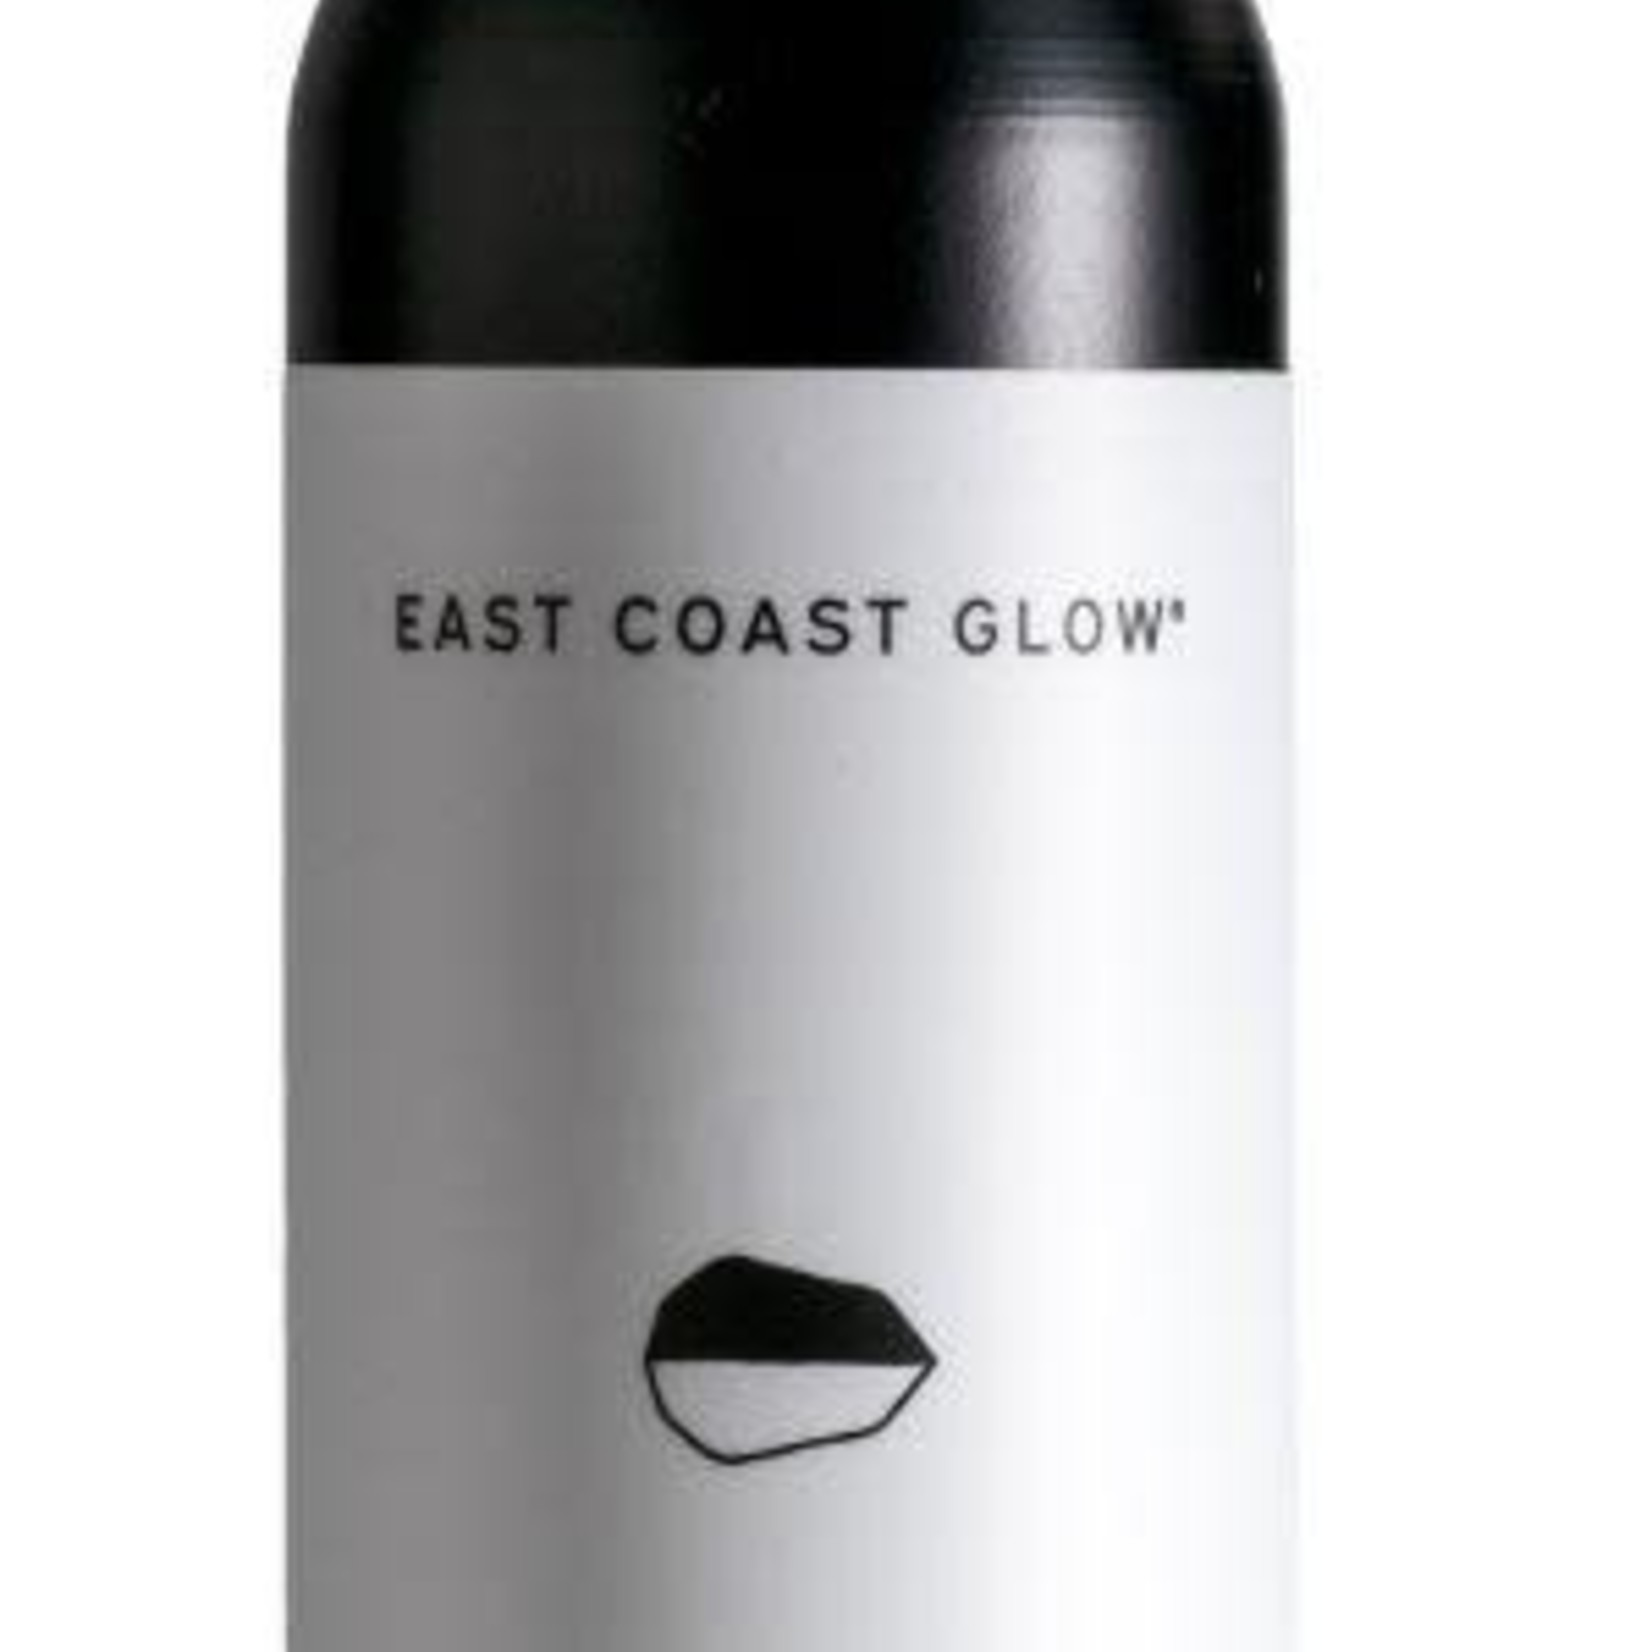 East Coast Glow East Coast Glow Wild River Mint & Rosemary Conditioner 237ml